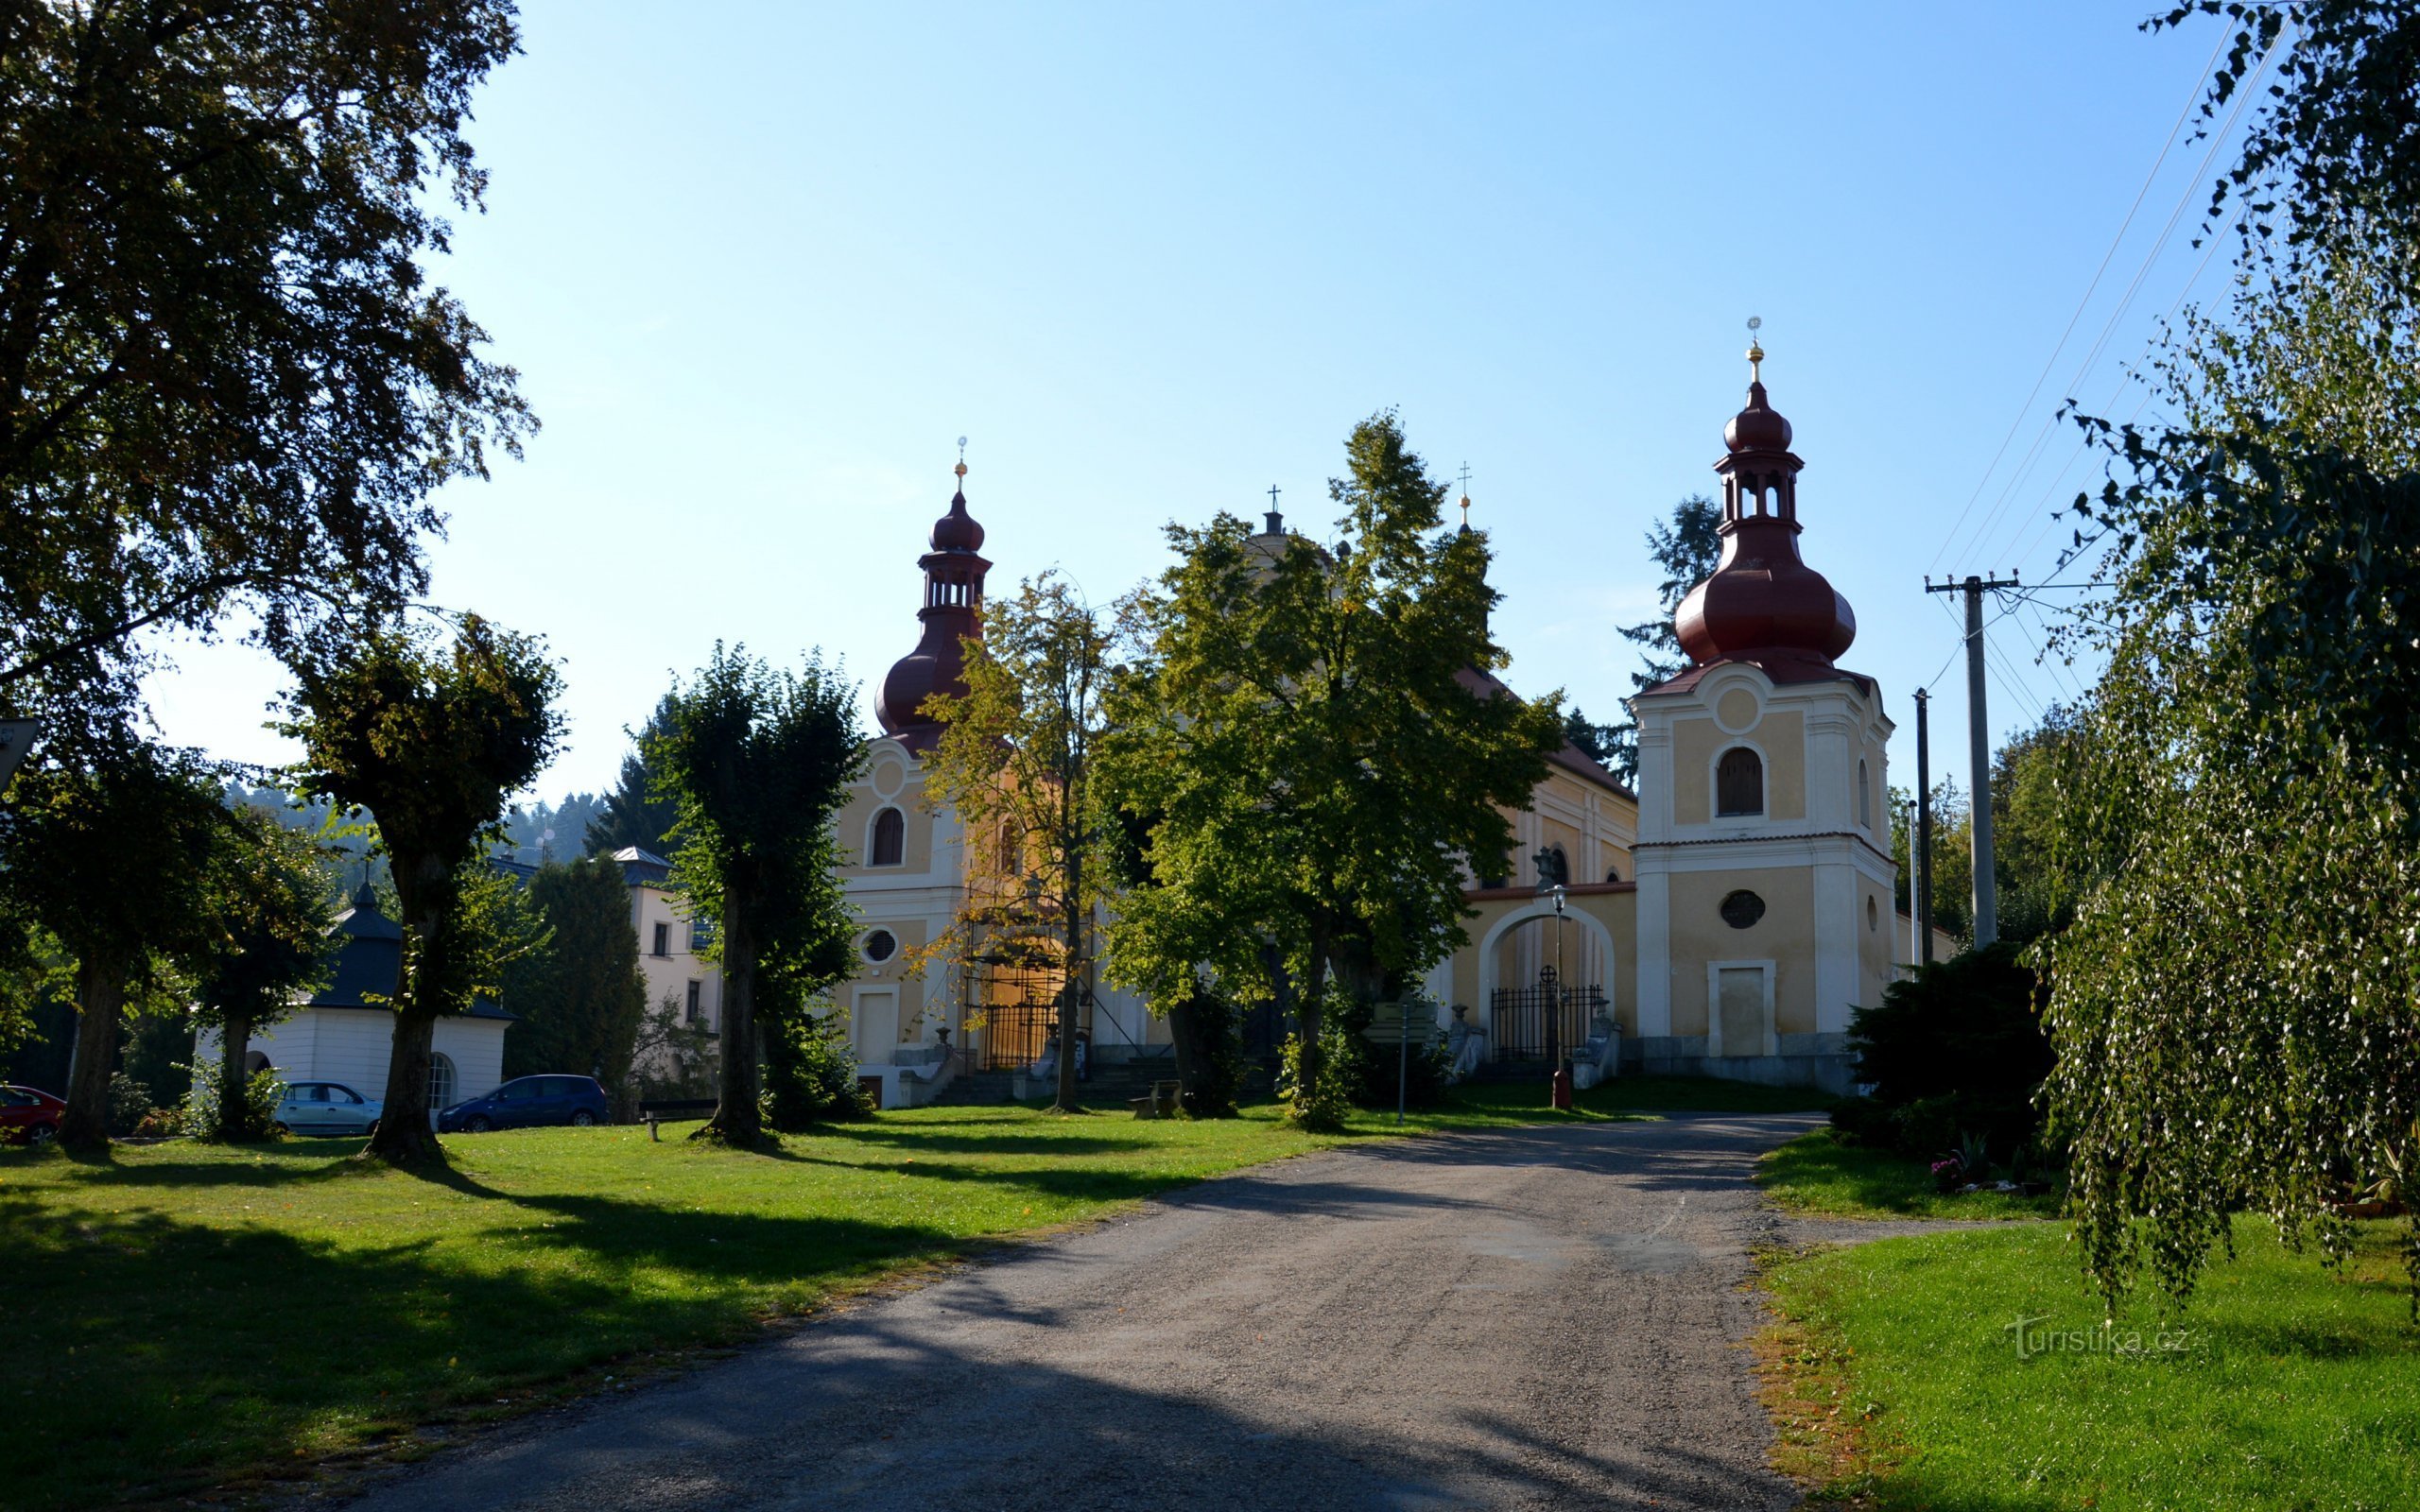 Sudějov - square with the church of St. Anne